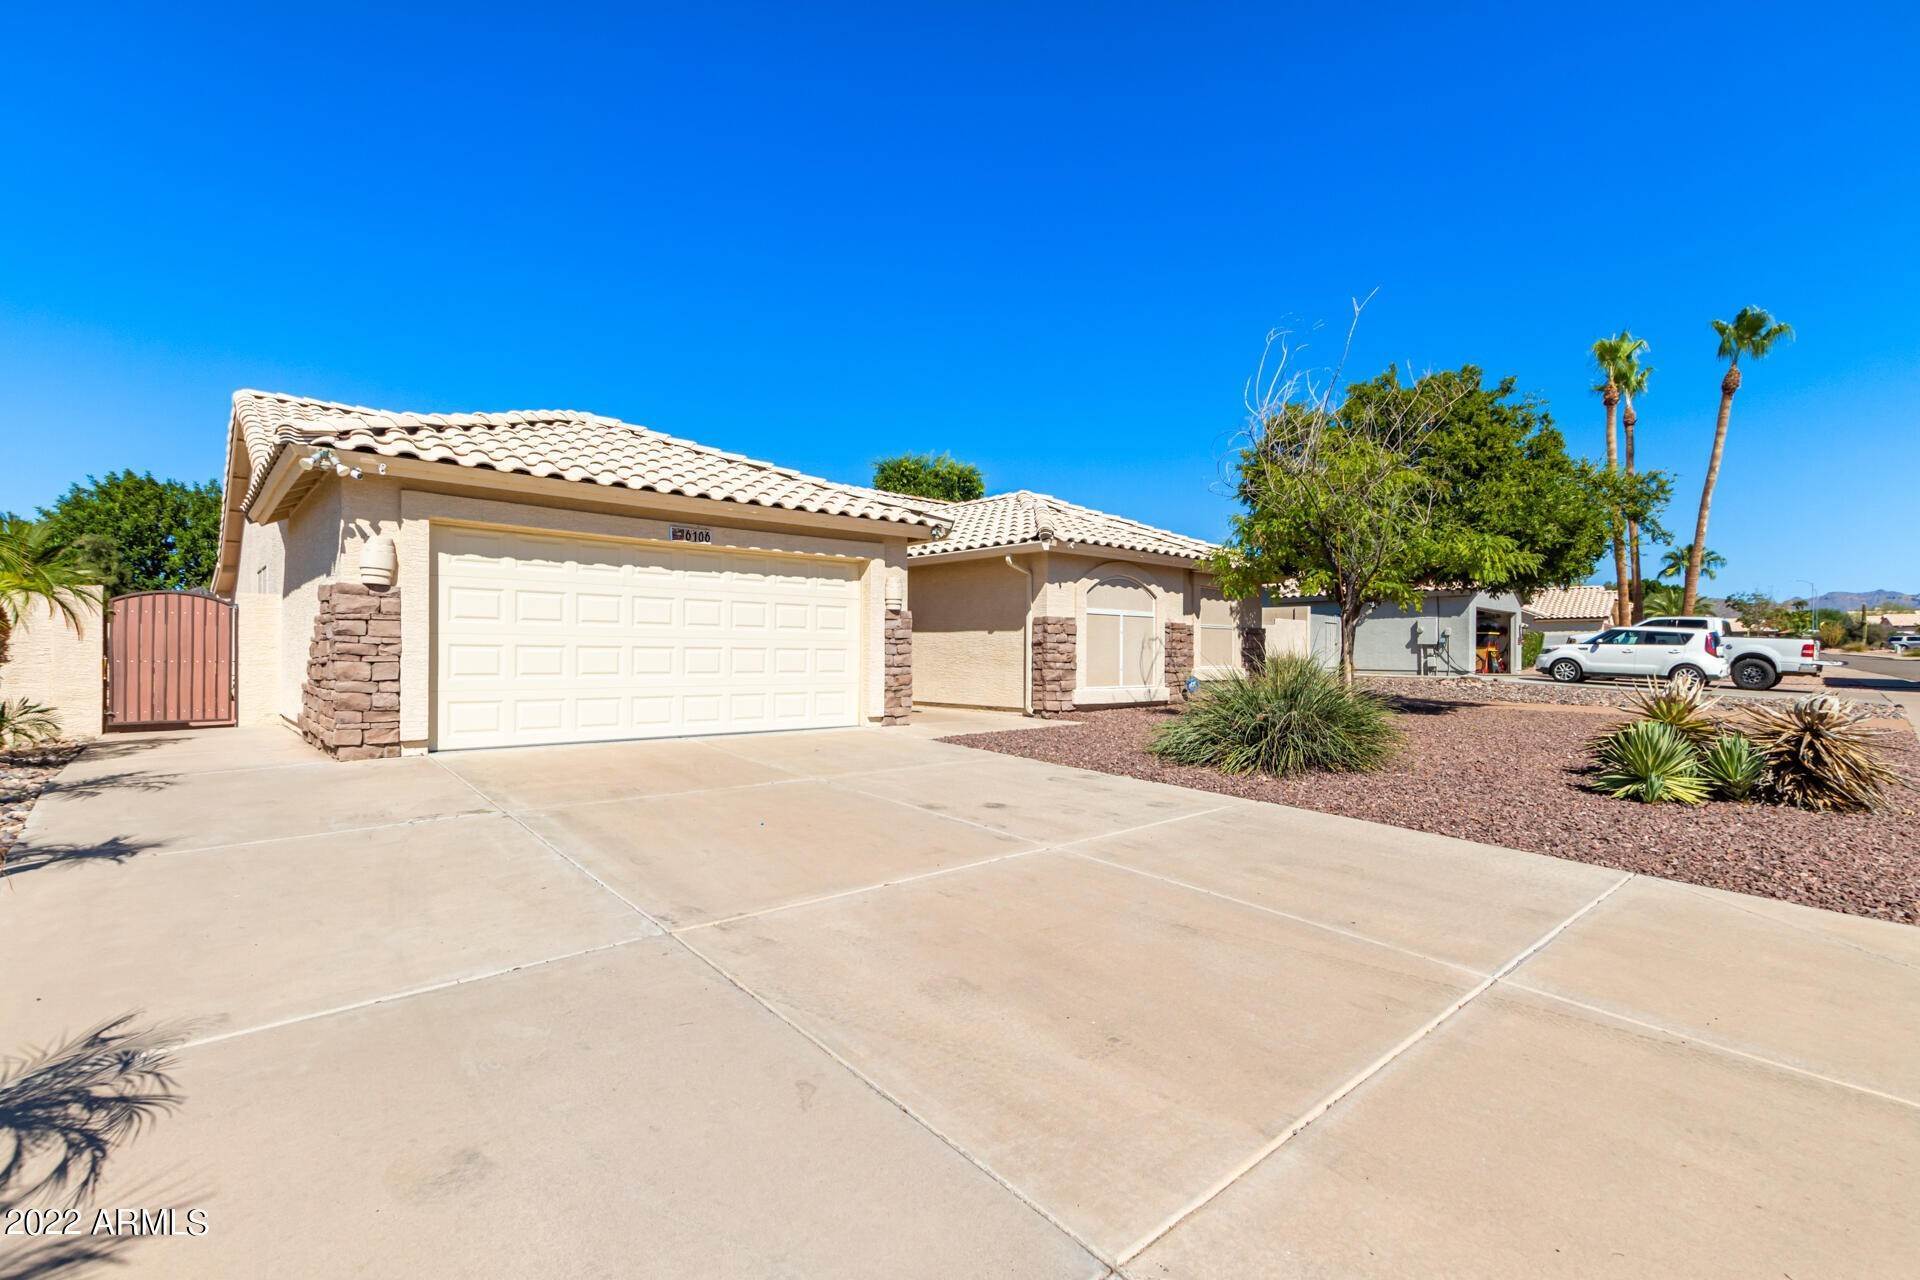 2. Single Family for Sale at Mesa, AZ 85215